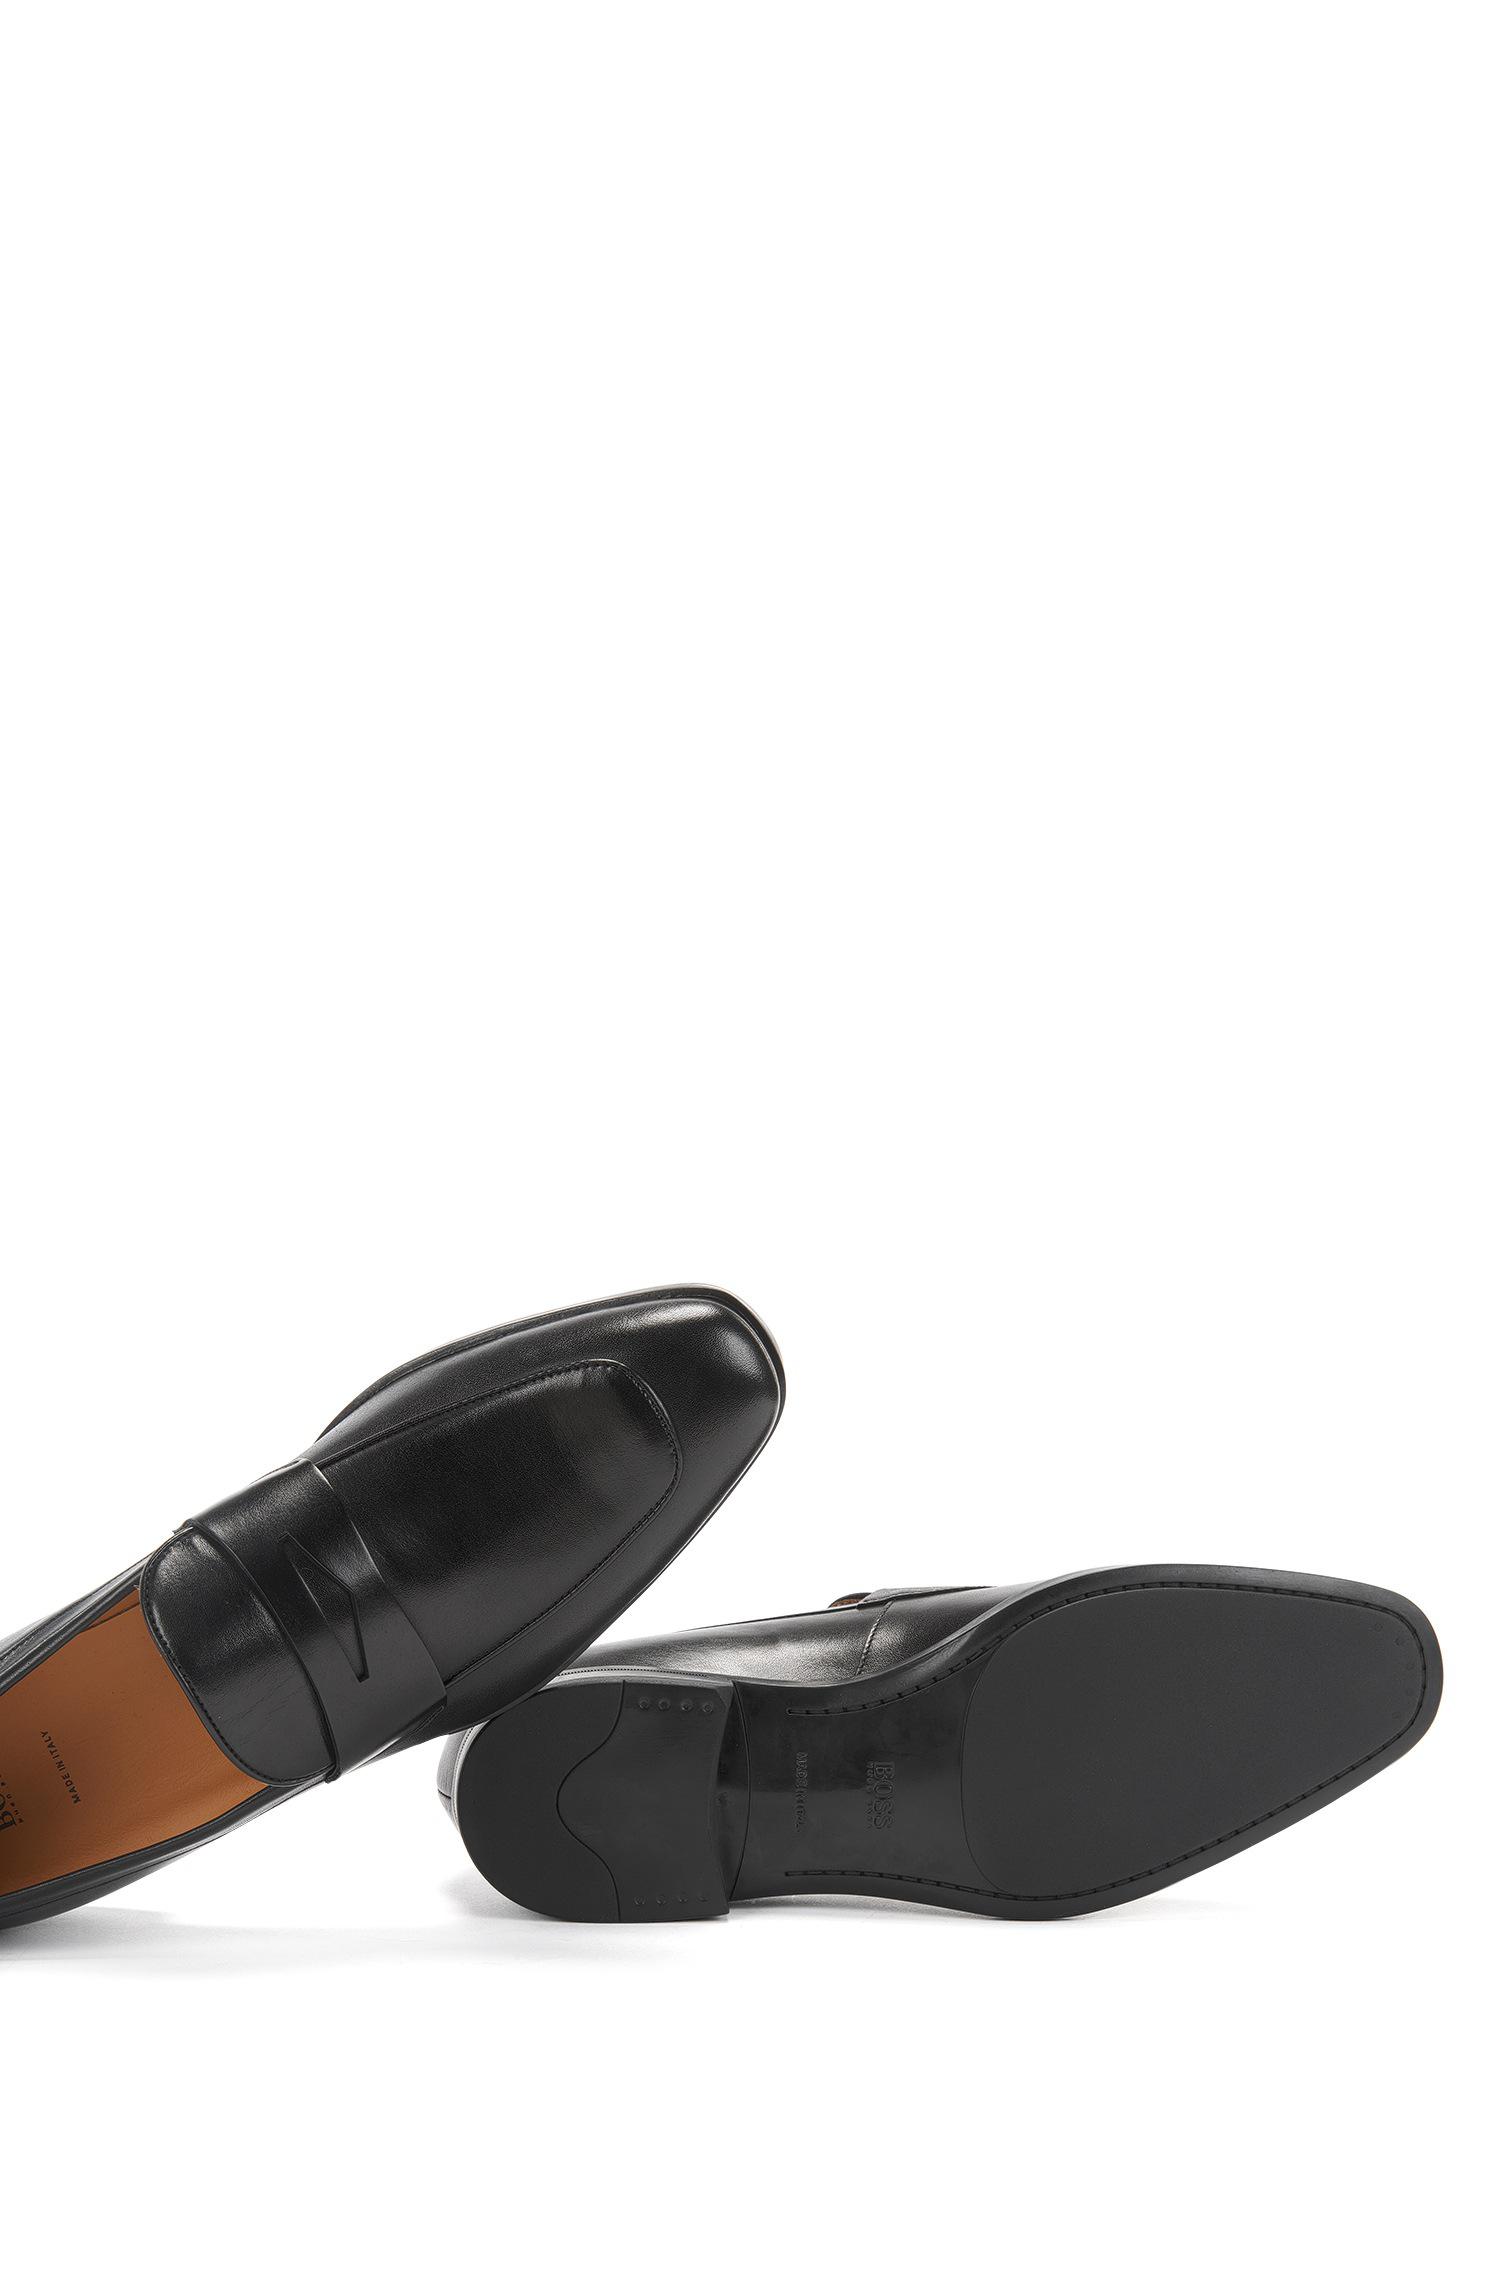 BOSS by Hugo Boss Kensington Leather Penny Loafers in Black for Men - Lyst